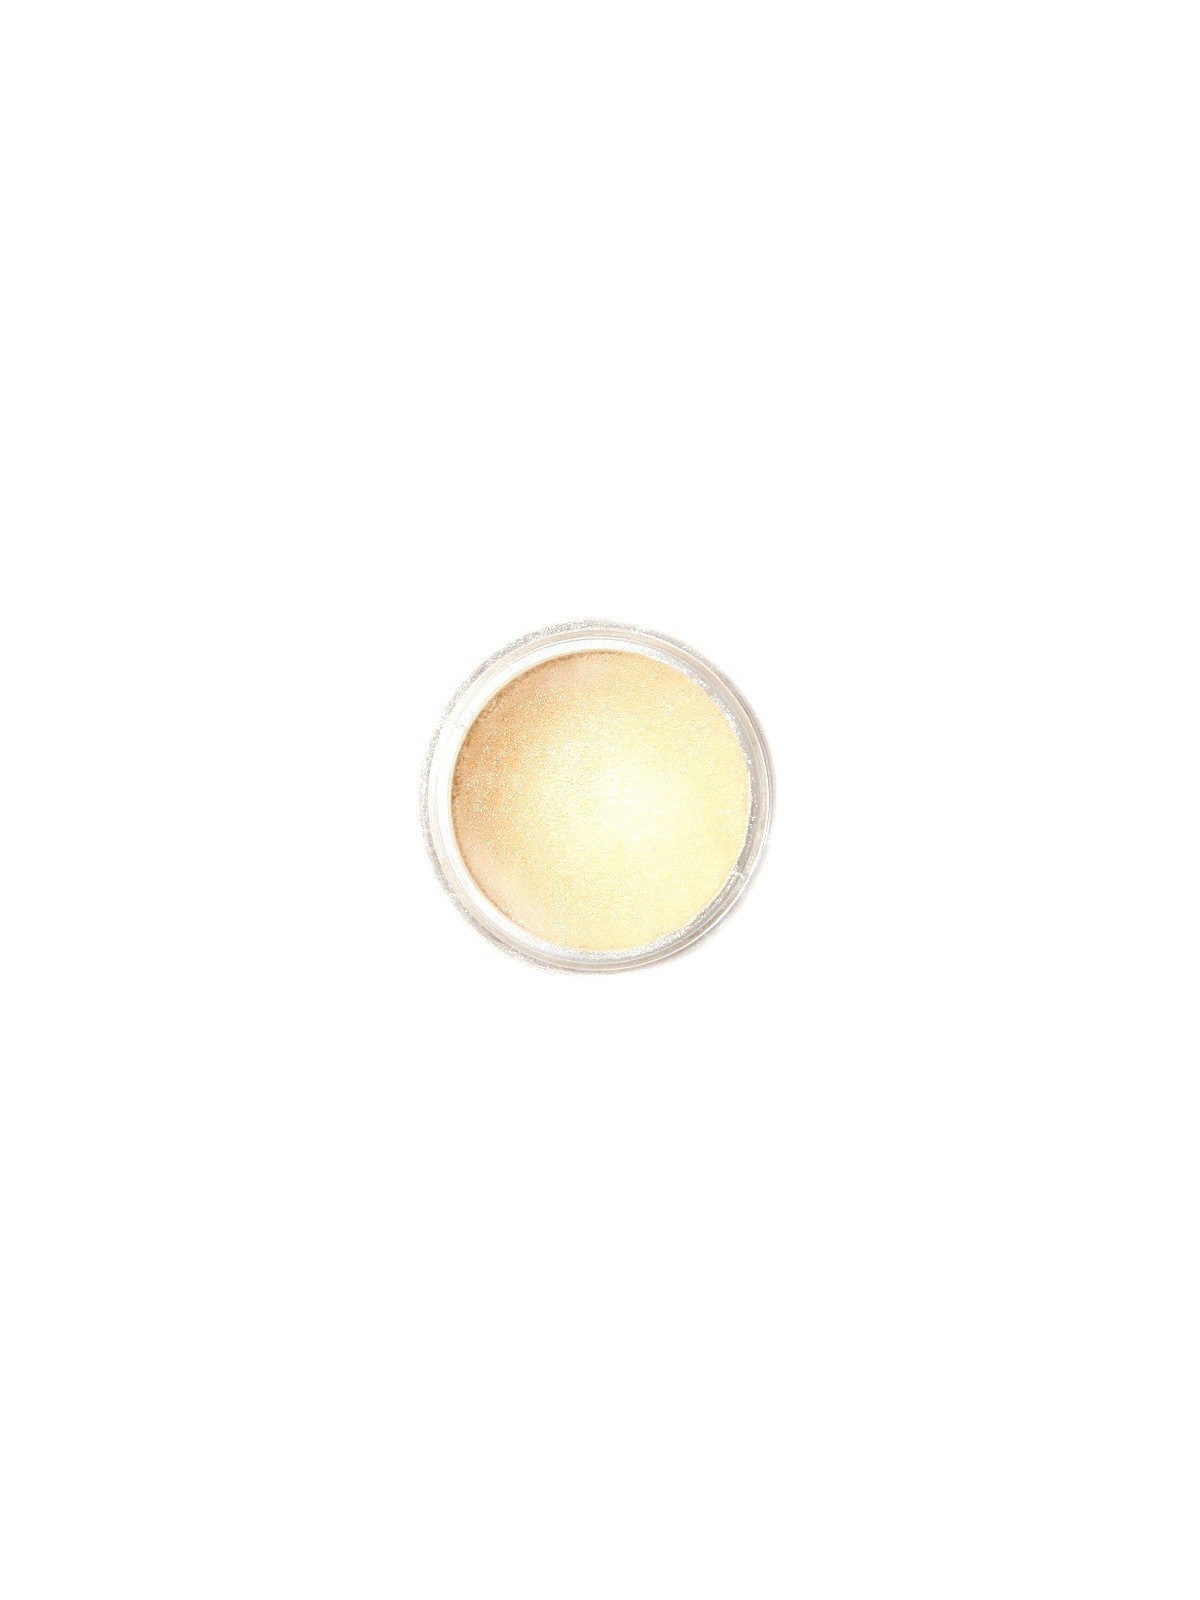 Dekorative Pulverperlenfarbe Fractal - Champagne Gold, Aranysárga (3 g)